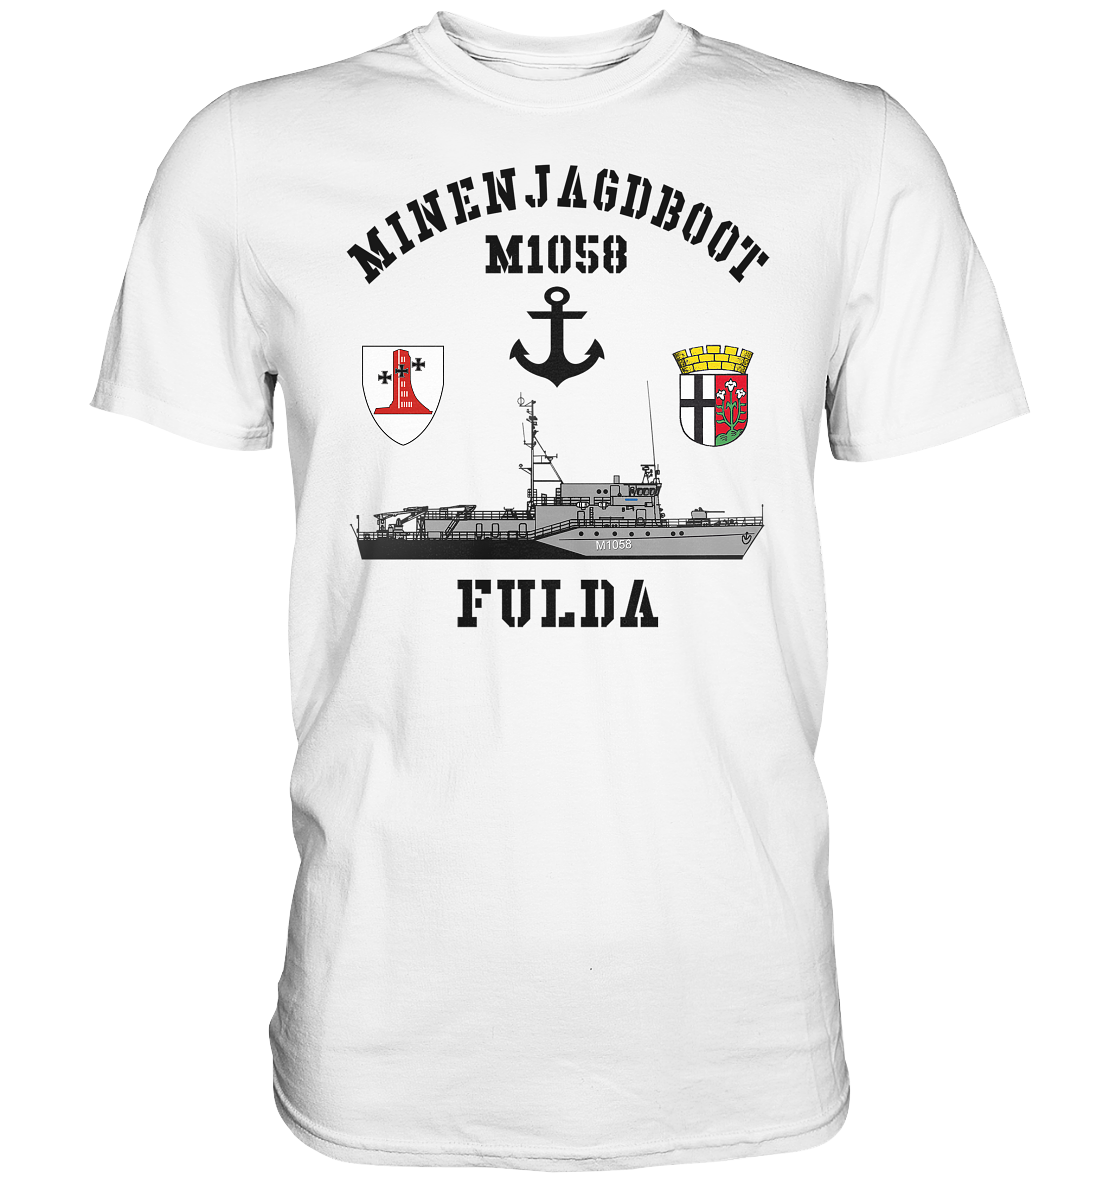 Mij.-Boot M1058 FULDA Anker 1.MSG - Premium Shirt